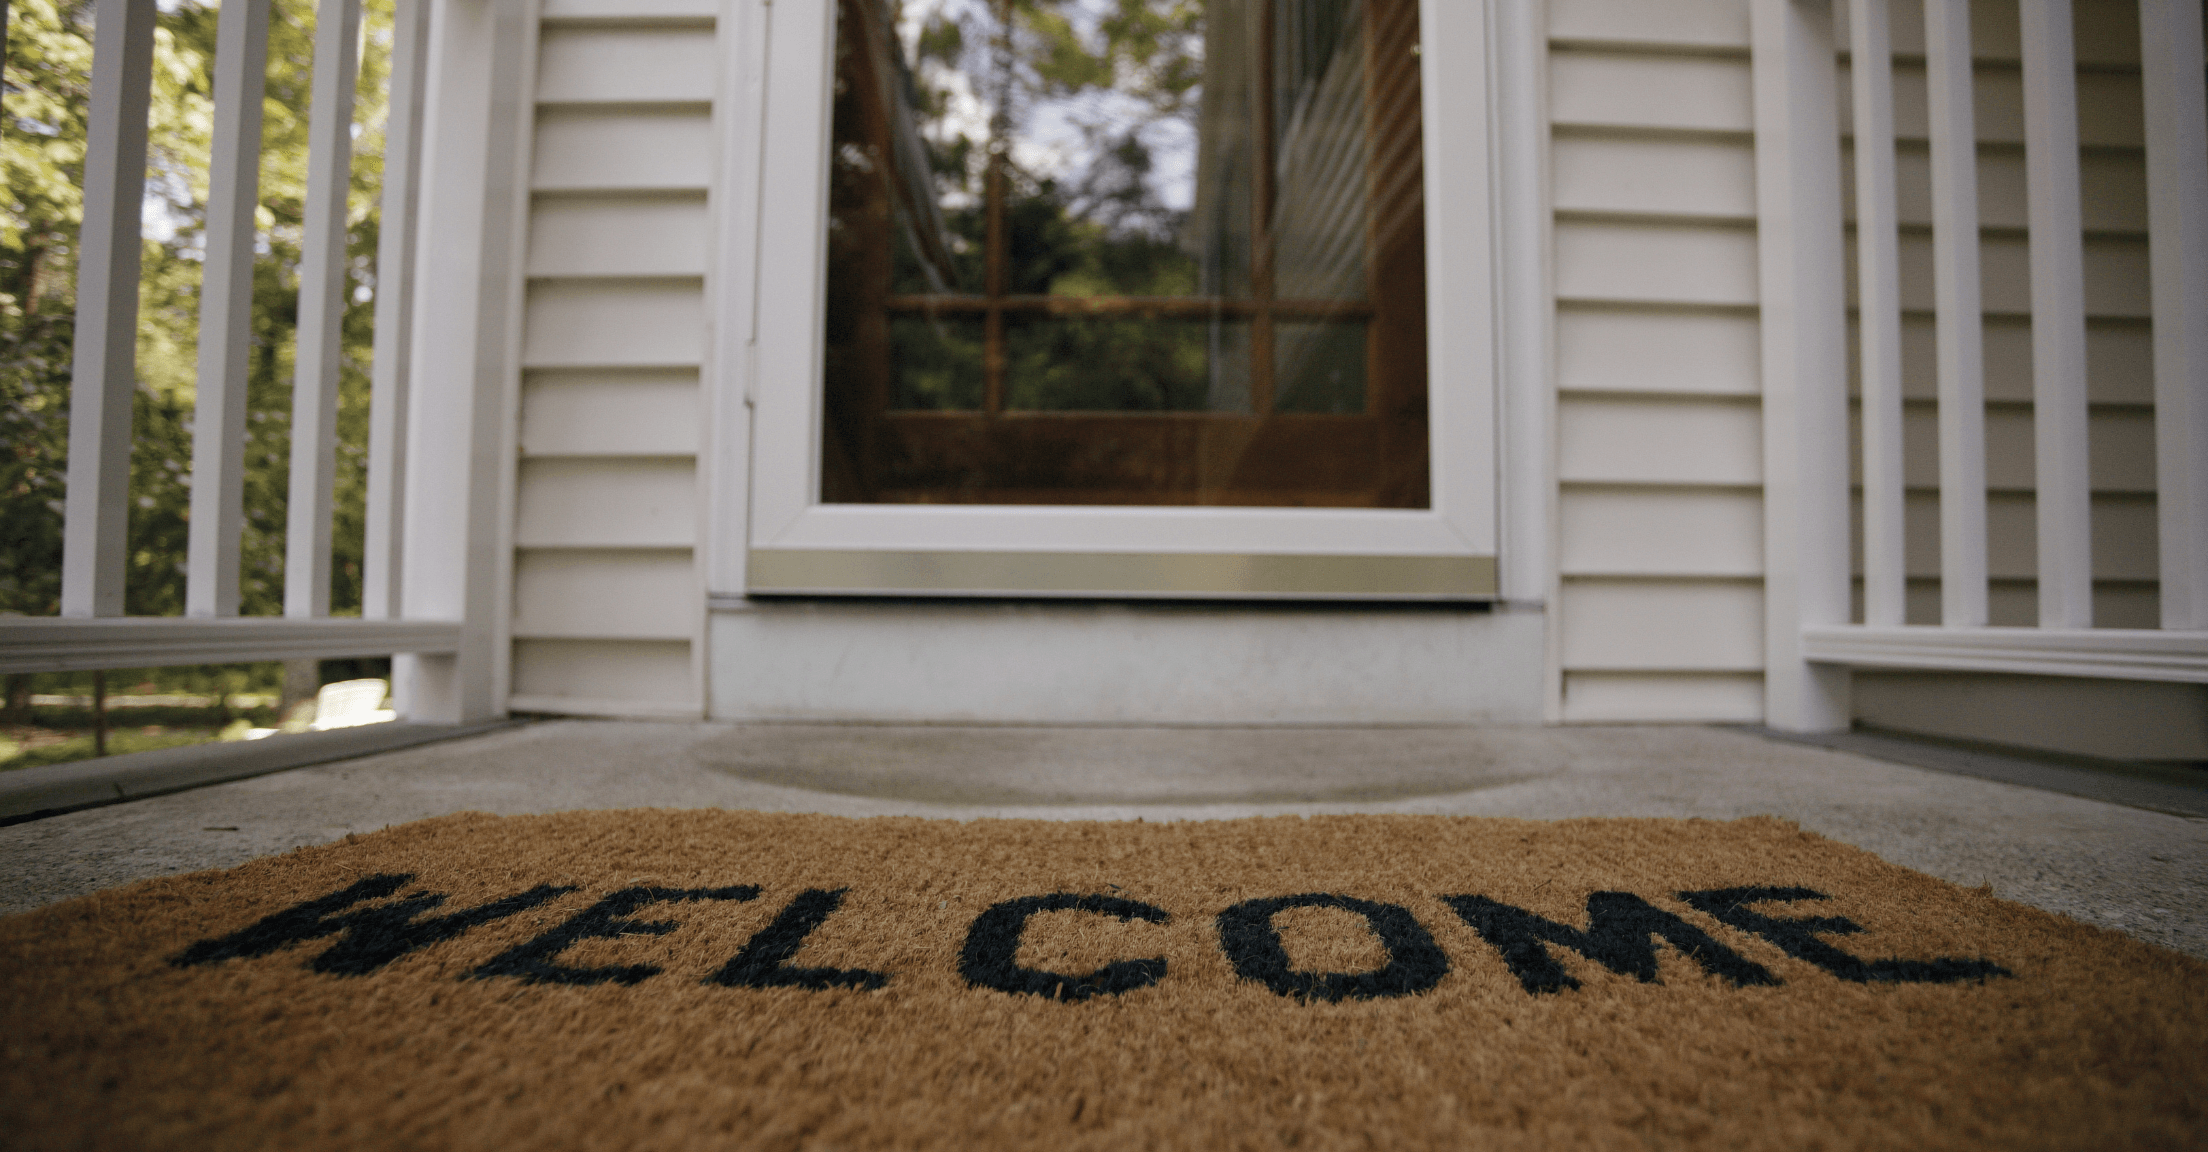 Welcome mat at a front door